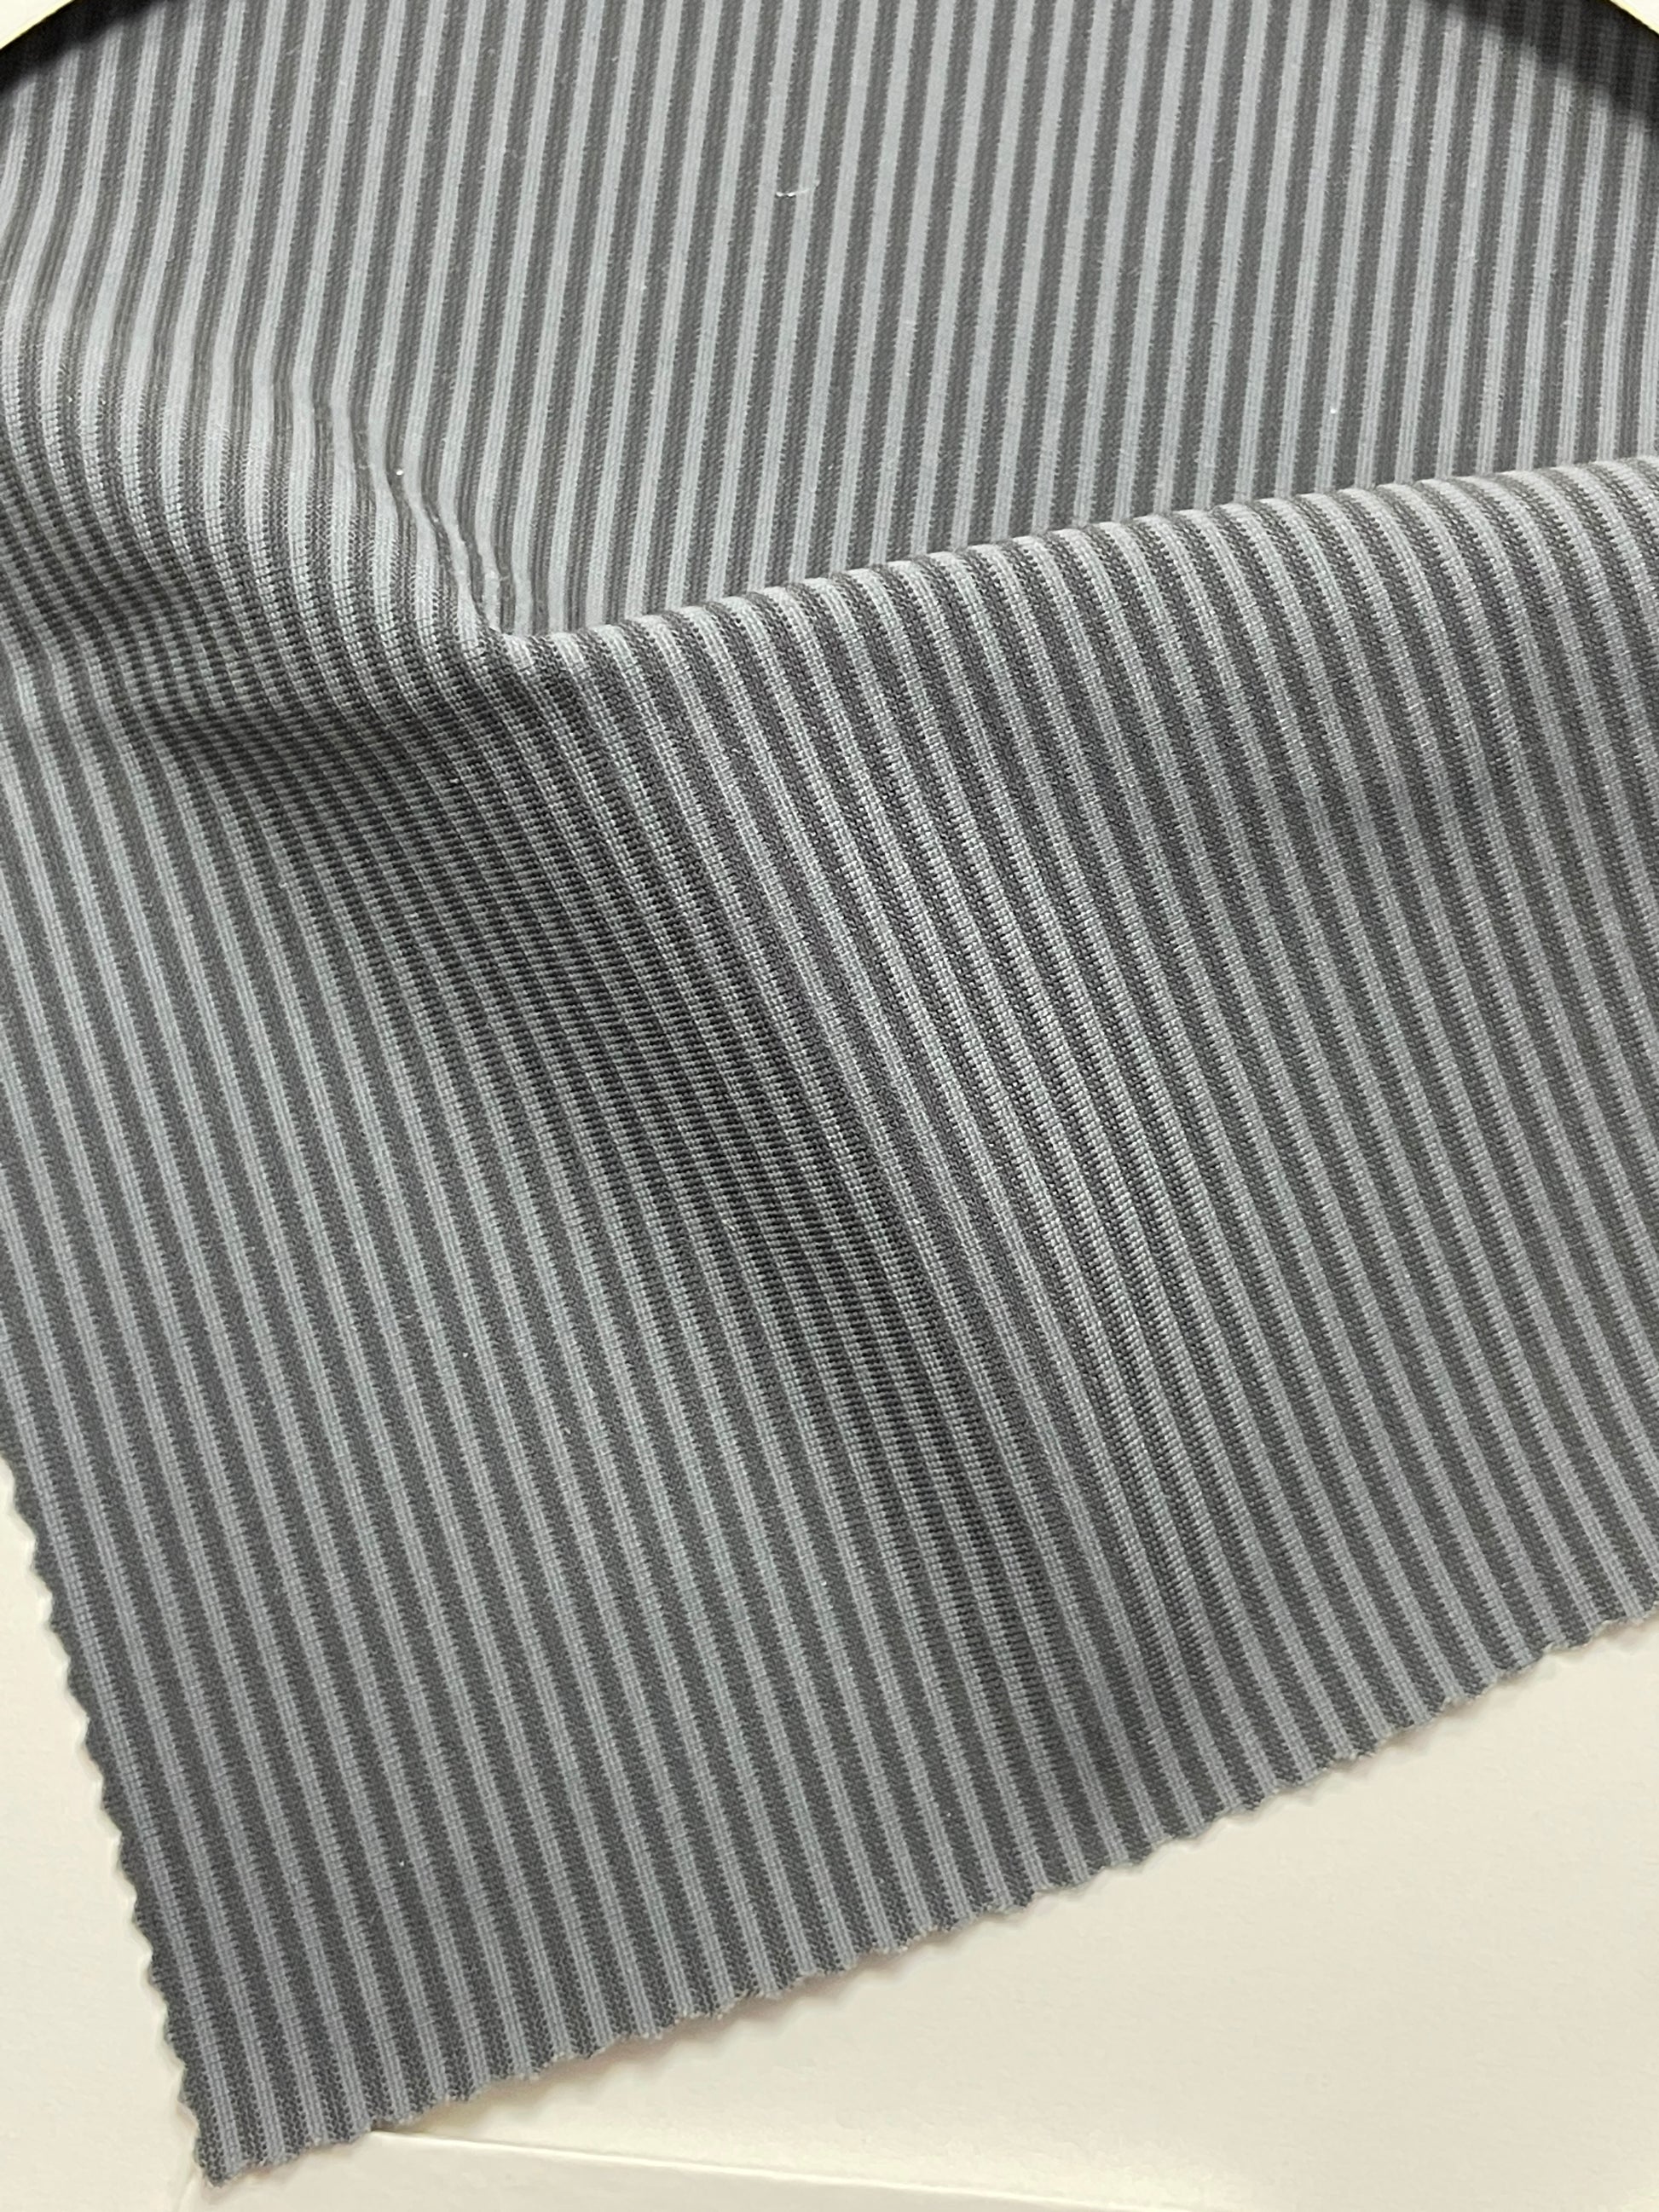 New Stripe Design Active Wear Fabric - Natasha Fabric